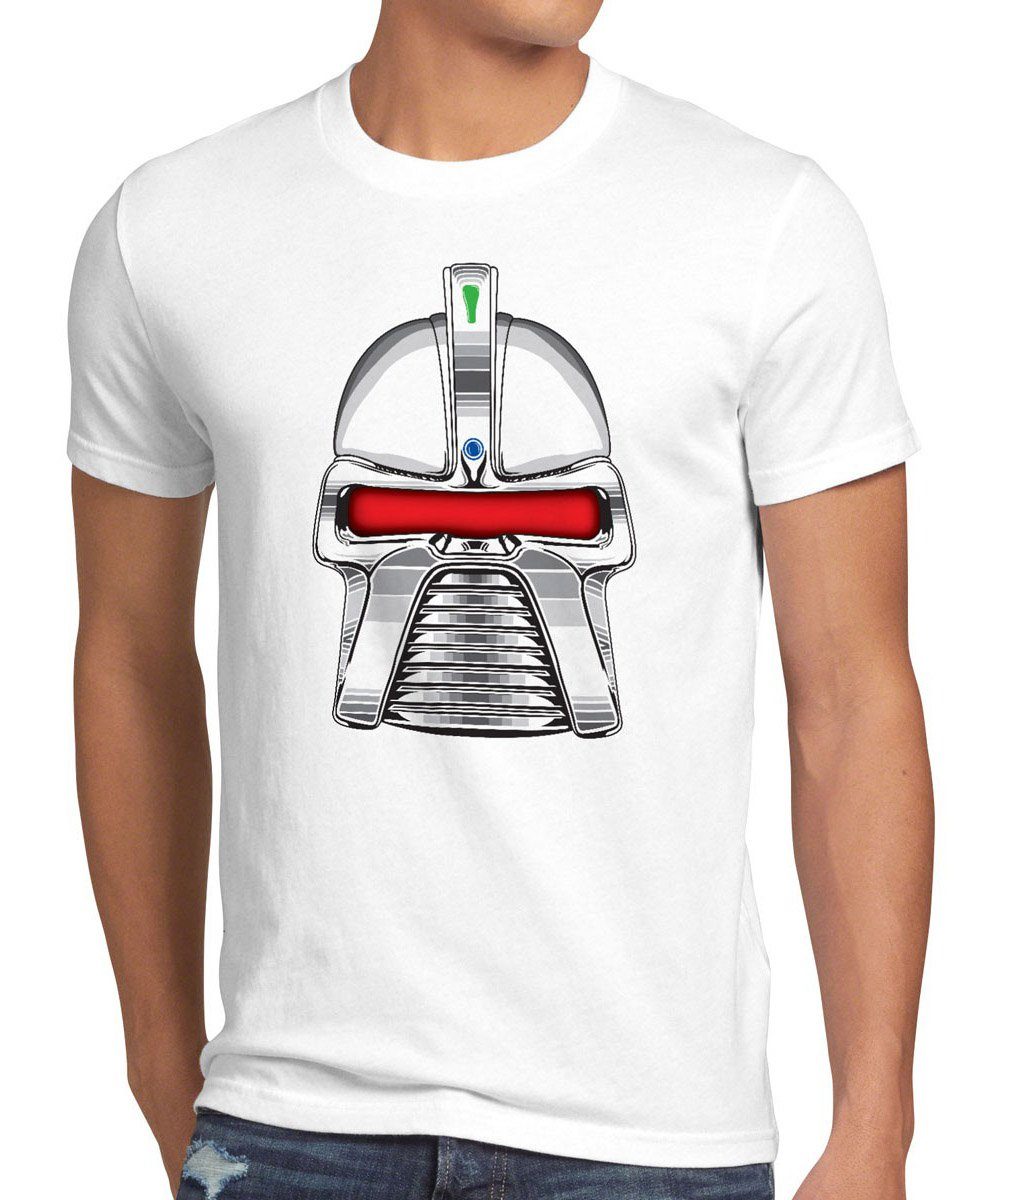 style3 Print-Shirt Herren T-Shirt Zylon Sheldon Big galactica bang star theory wars cooper trooper weiß